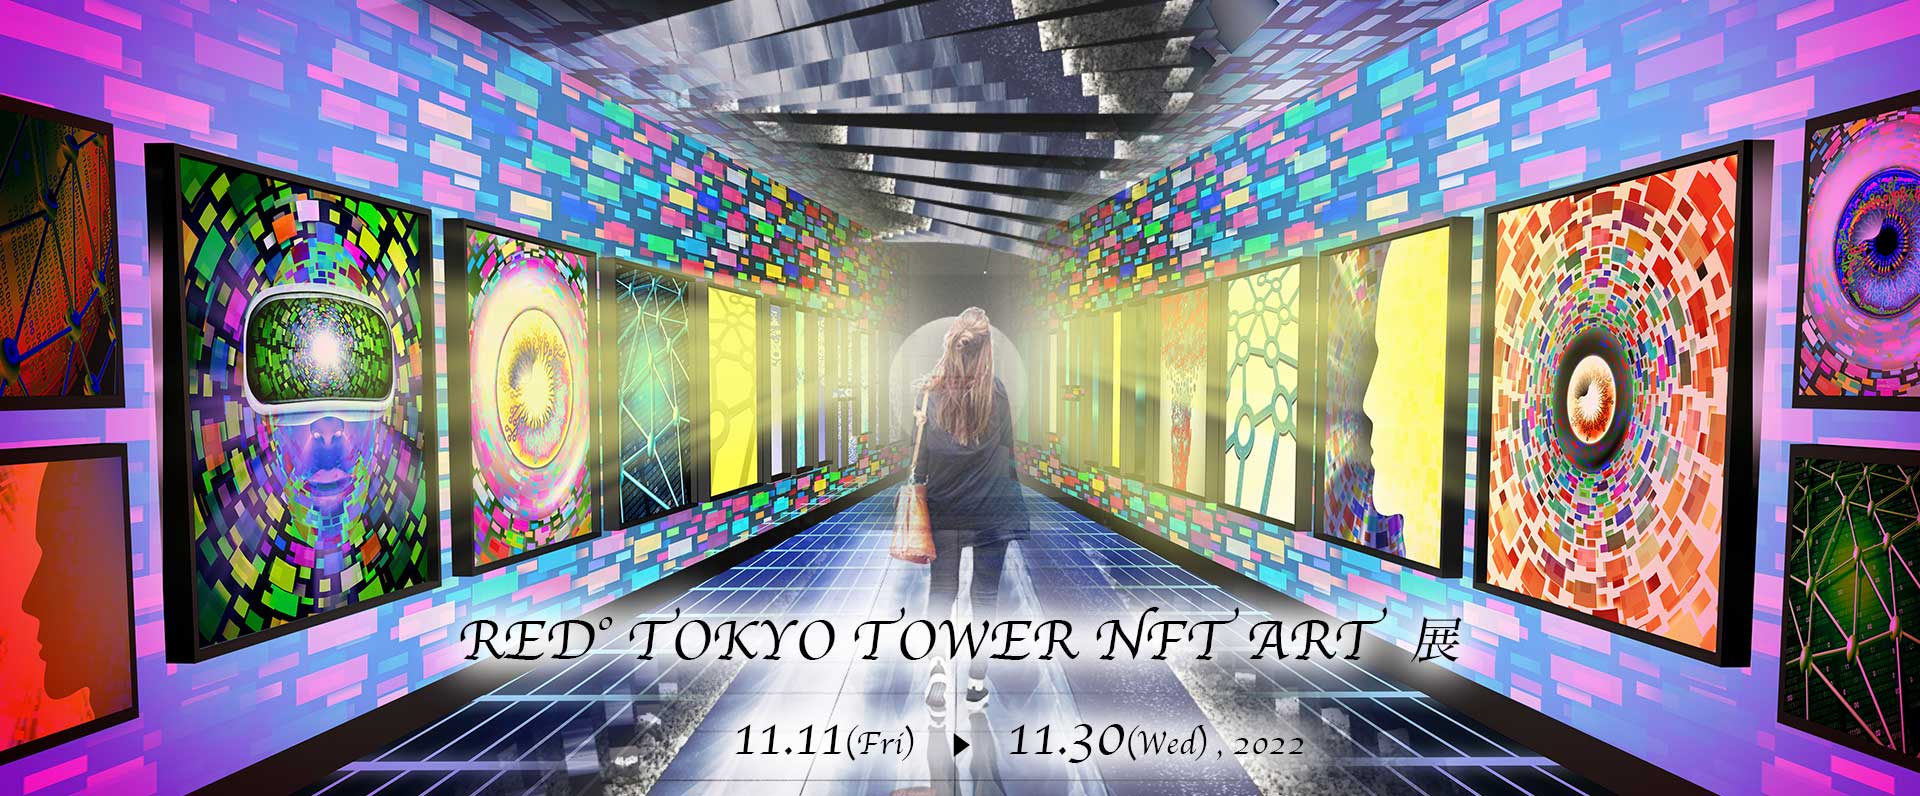 『NEXT JAPANコンテンツ』を世界に発信 GAME、漫画、アニメ、VTuber、アート等、日本の次世代を担うクリエイターに グローバル進出のゲートウェイとして「RED° TOKYO TOWER」を開放